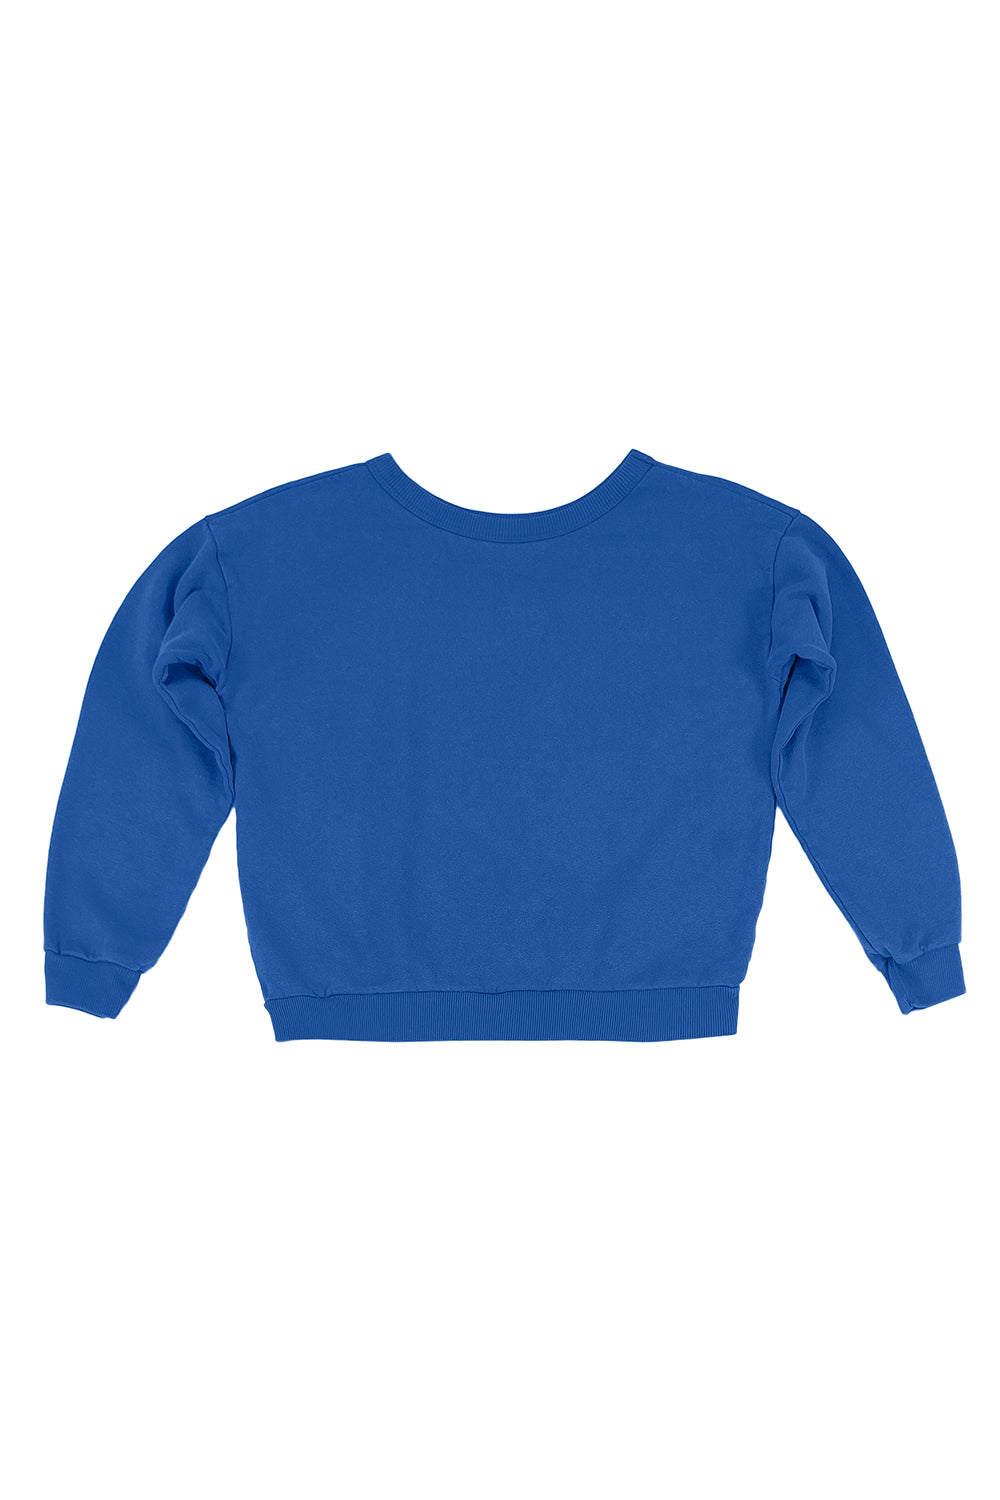 Laguna Cropped Sweatshirt | Jungmaven Hemp Clothing & Accessories / Color: Galaxy Blue